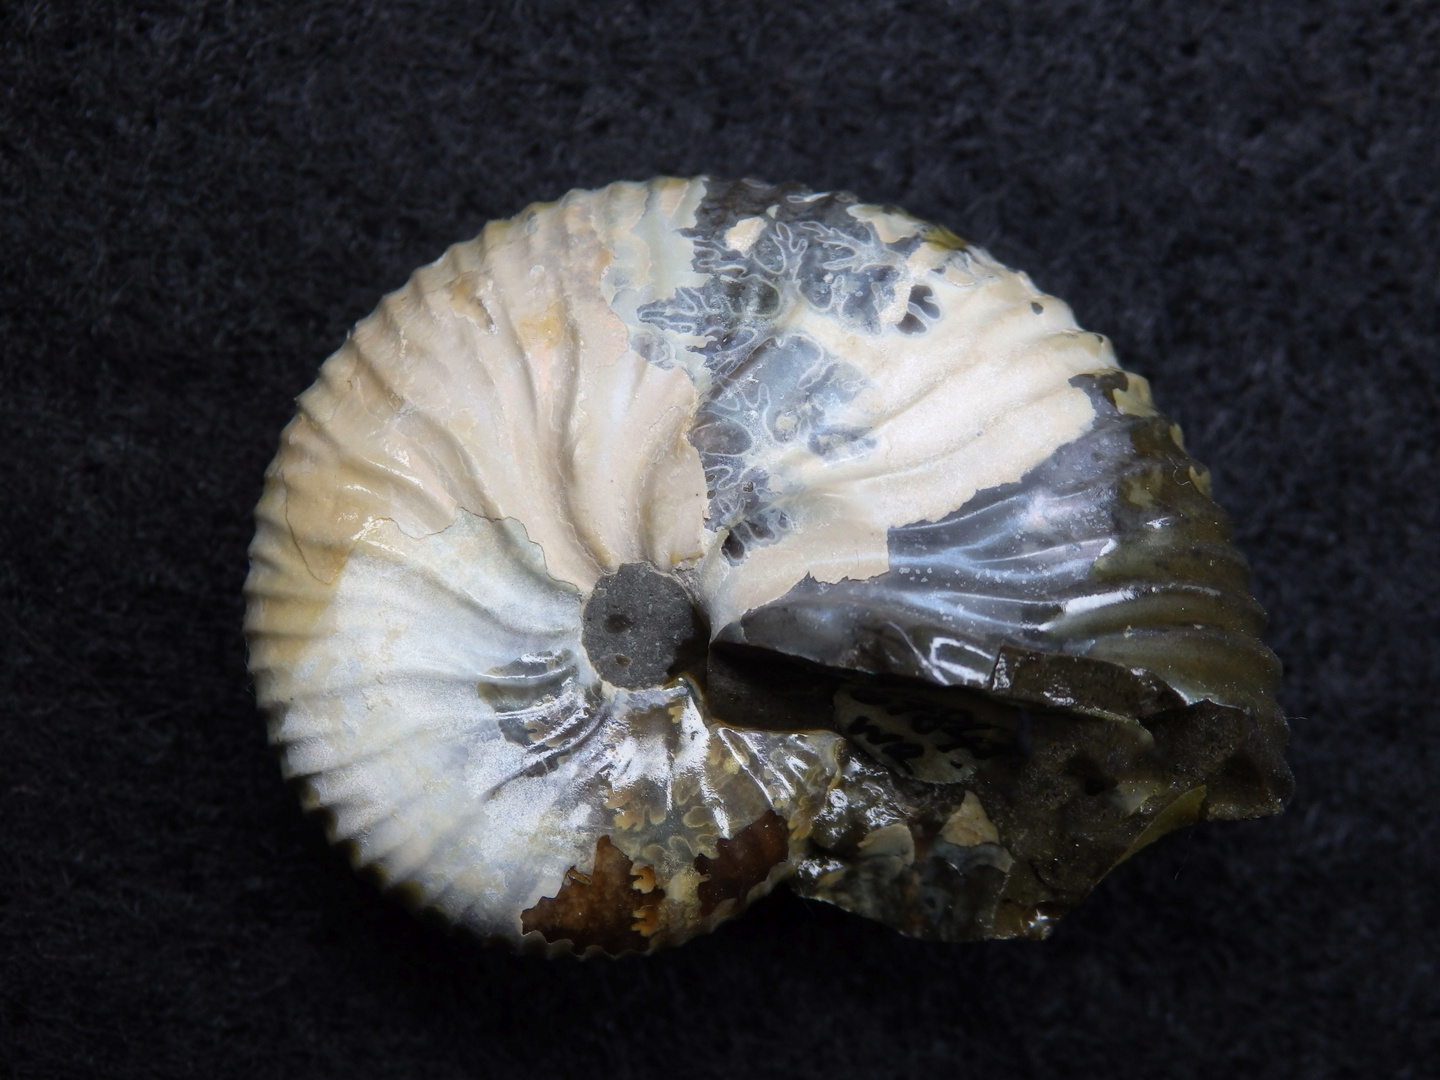 Ammonit aus der Kreidezeit - Jeletzkytes sp.